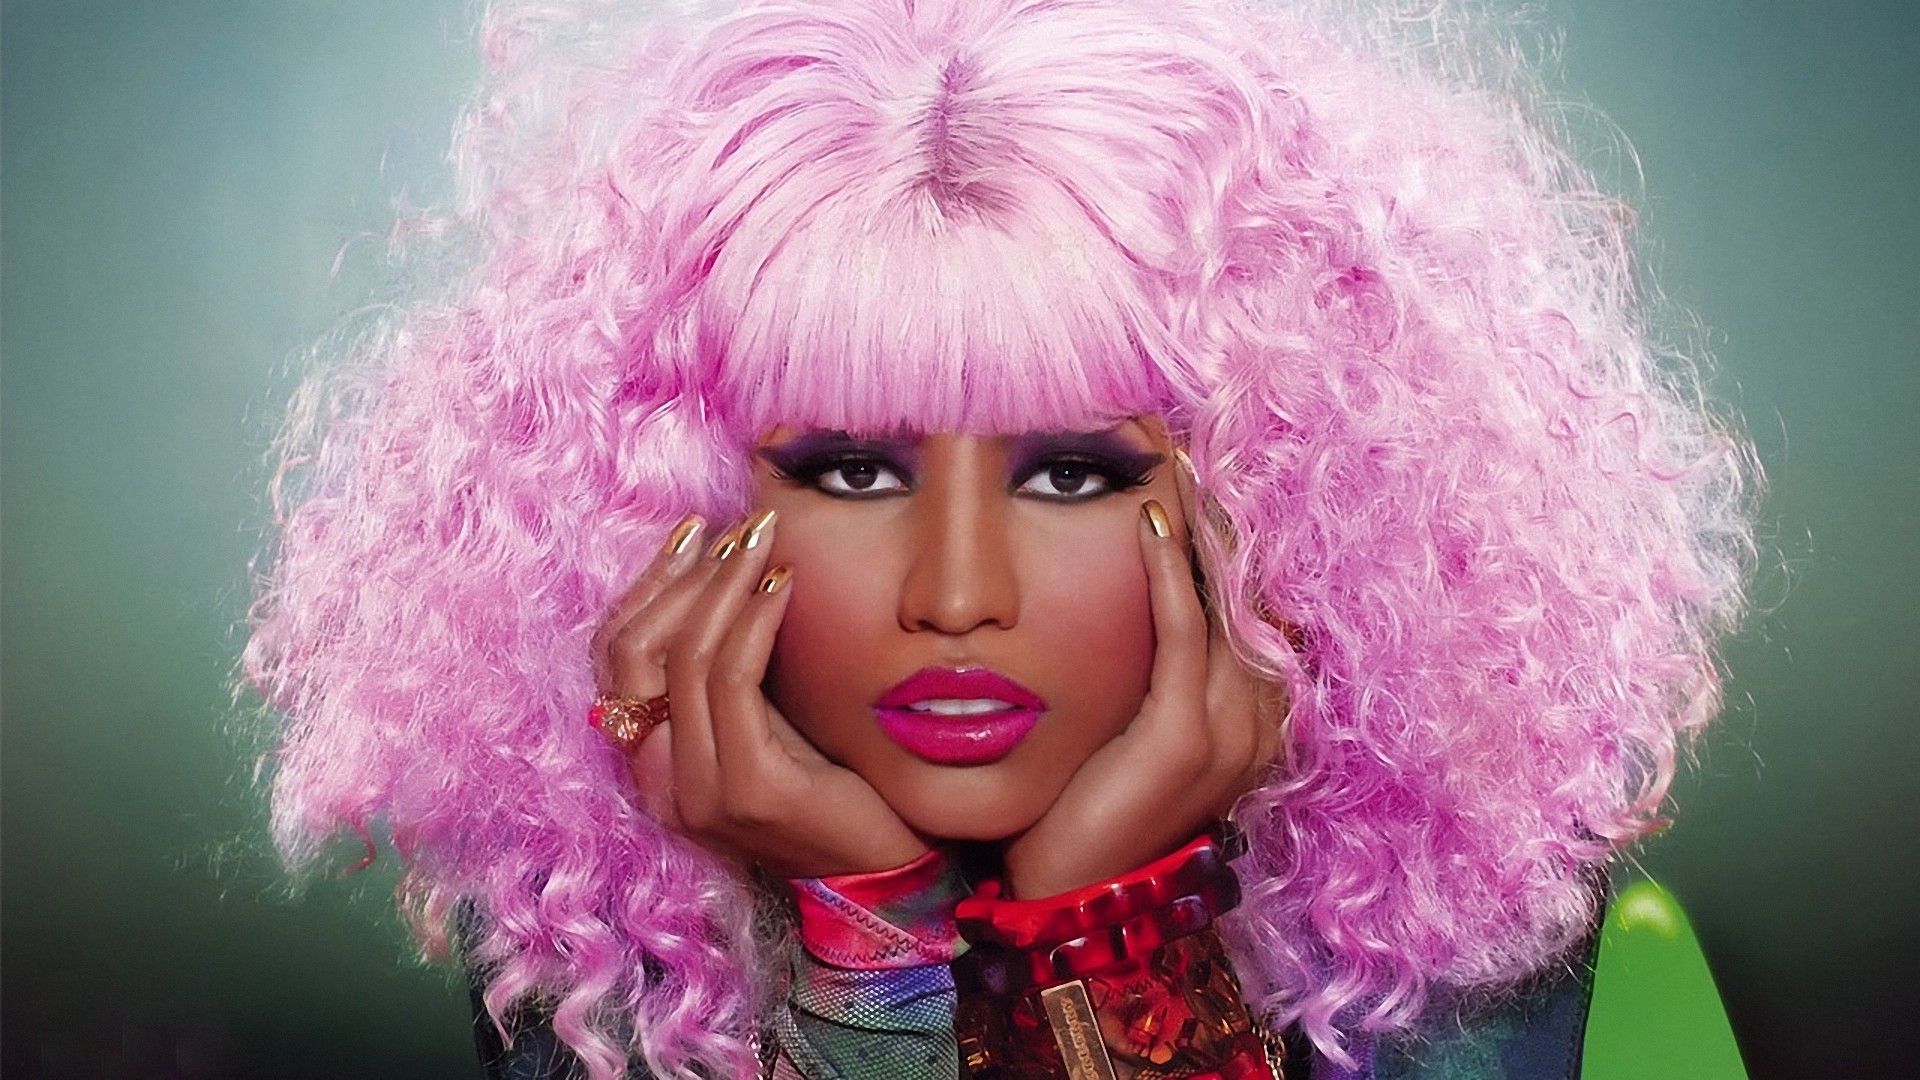 Nicki Minaj 2013 Hd Wallpaper High Quality WallpapersWallpaper 1920x1080